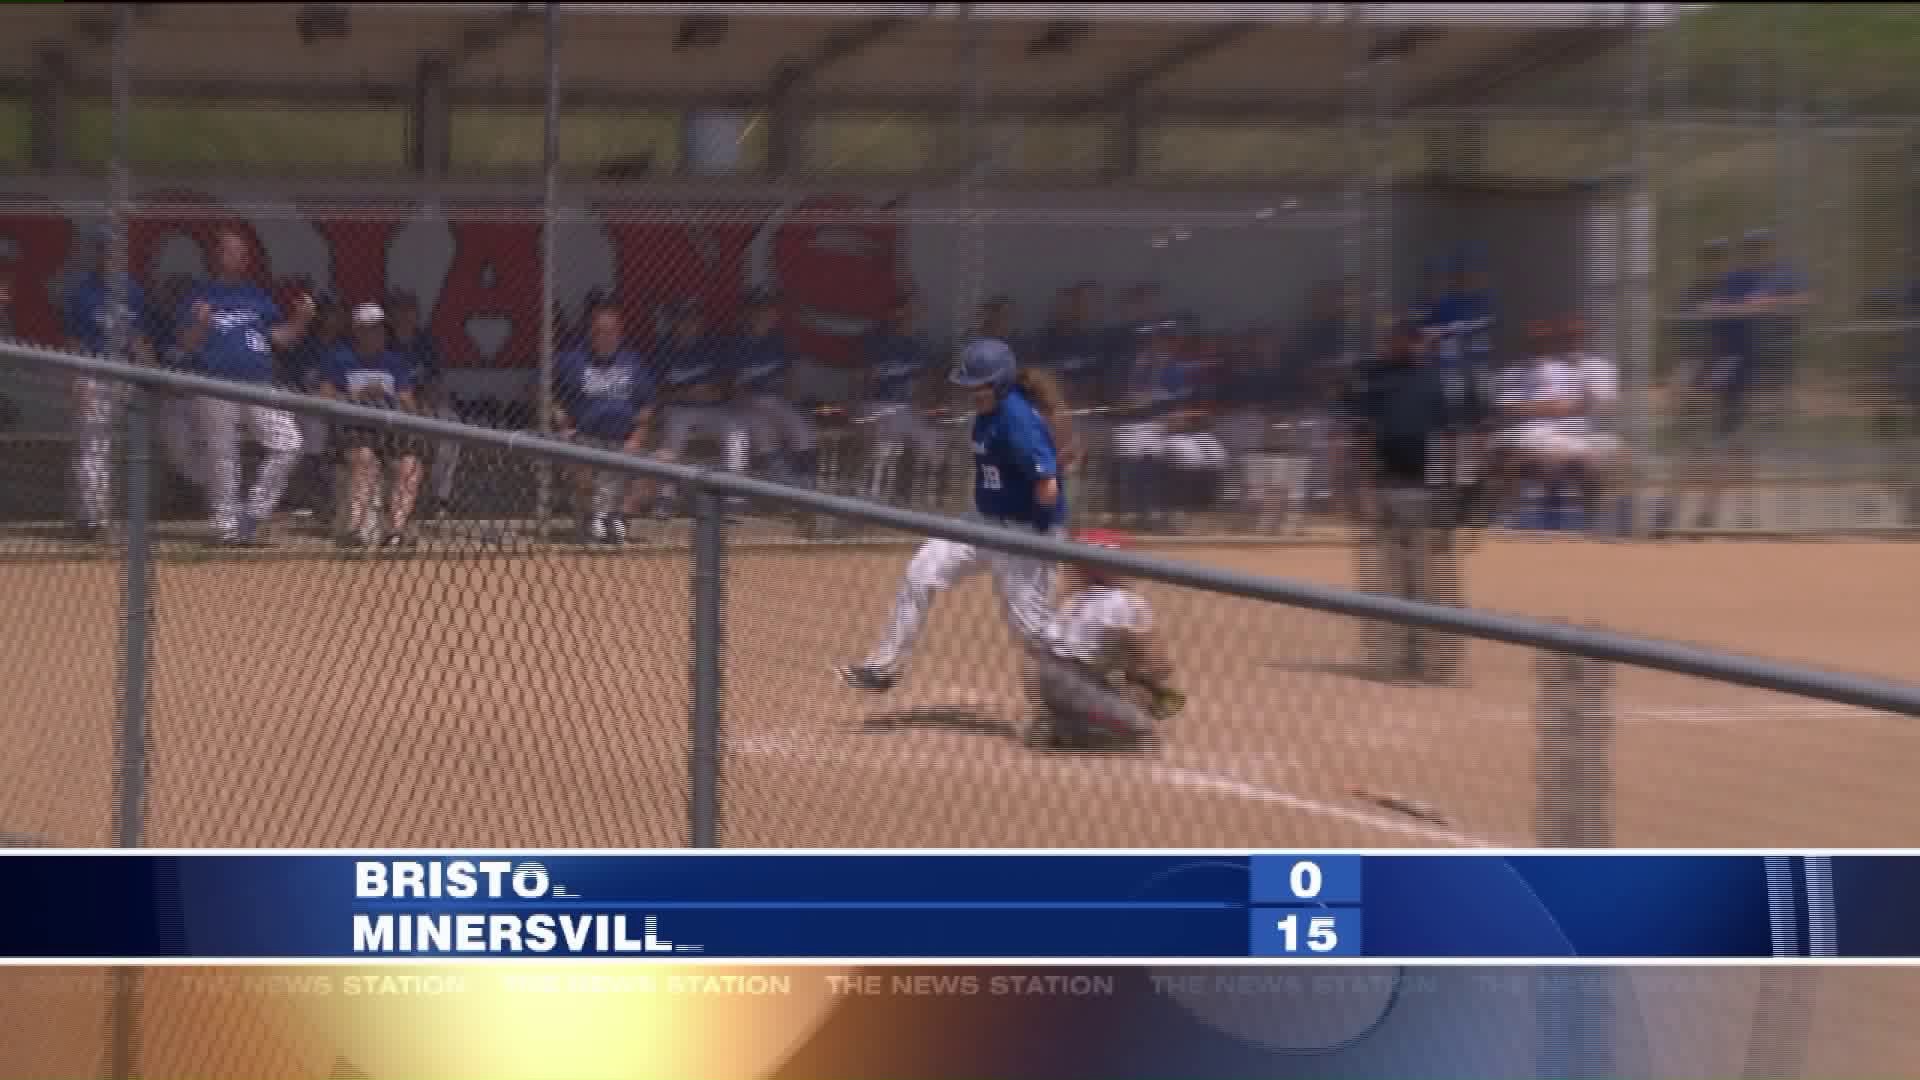 Minersville vs Bristol softball